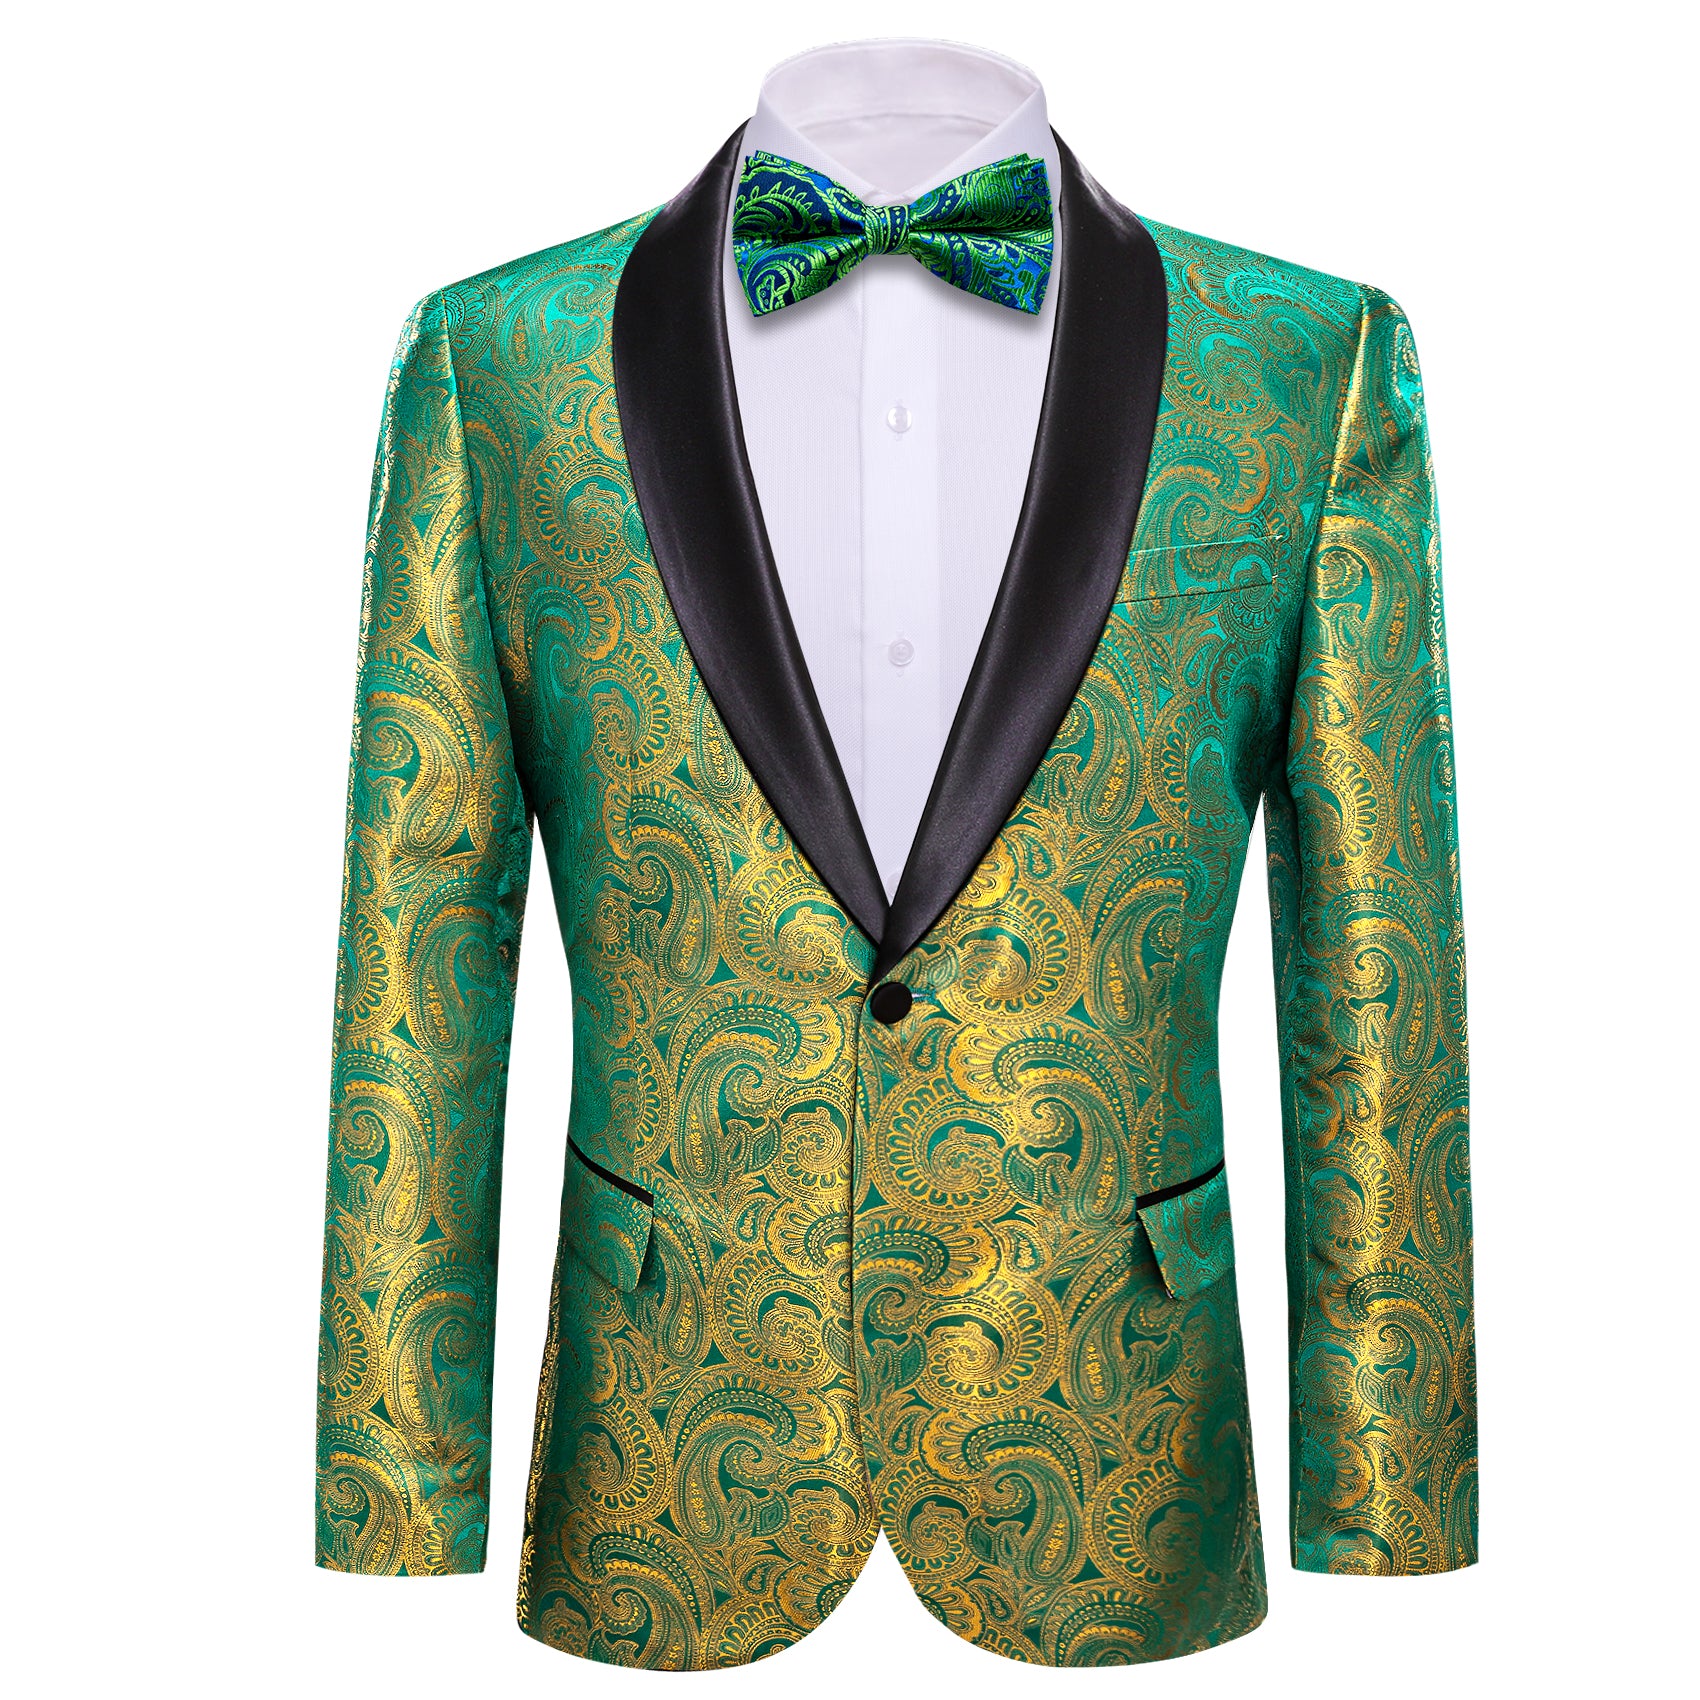 	 green wedding suit Men's Bright Green Floral Suit Jacket